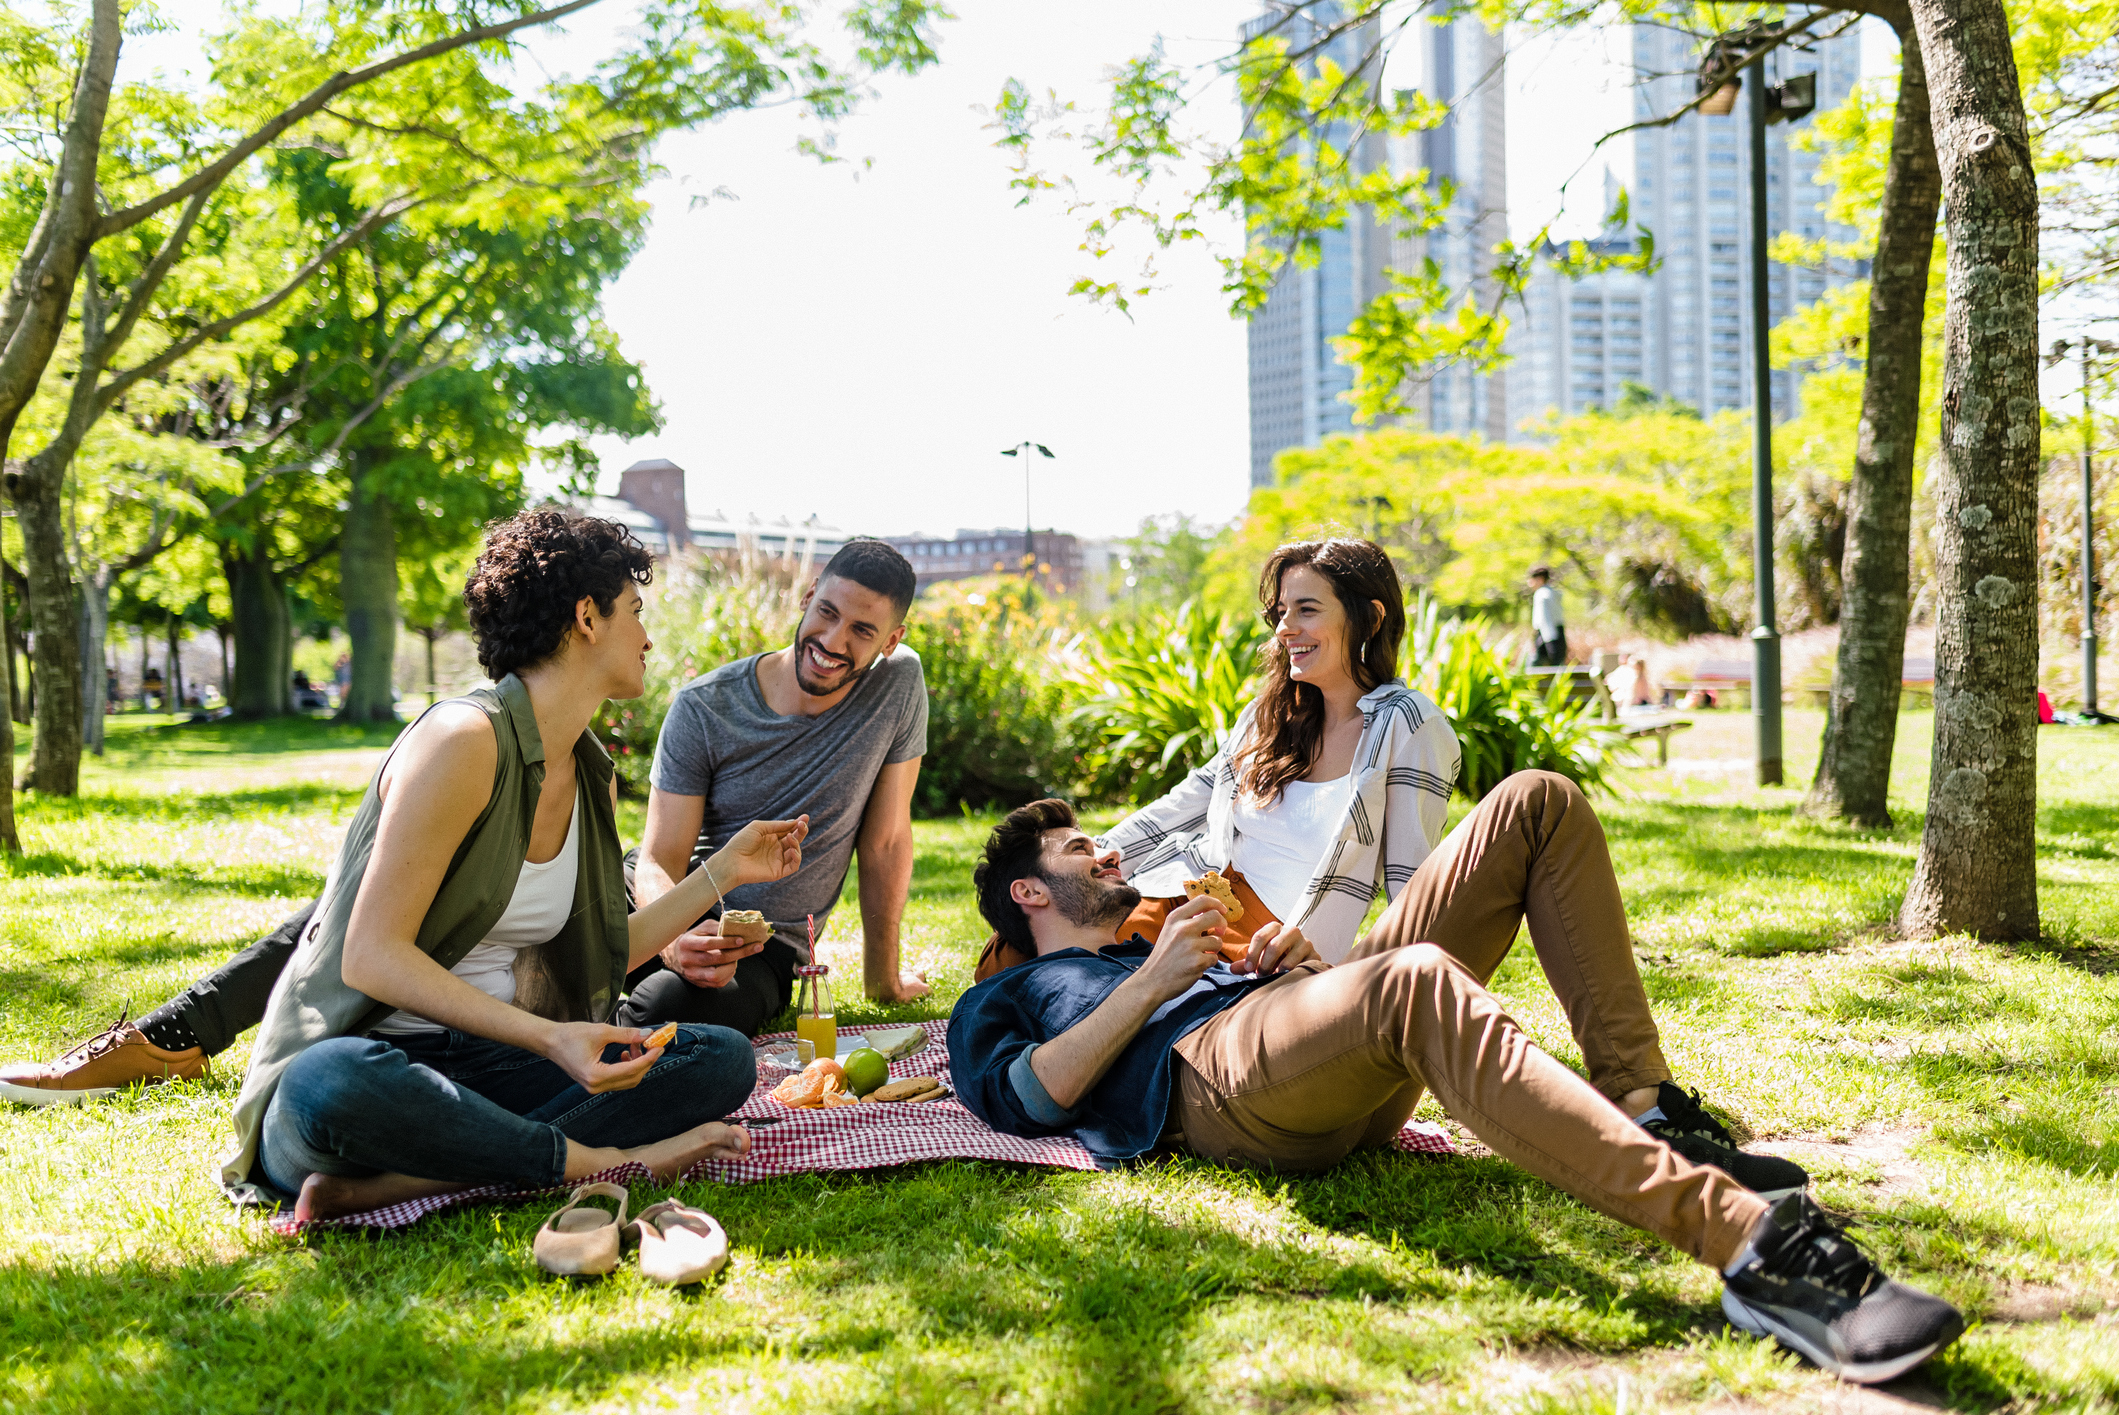 Four friends enjoying a picnic in a park.
